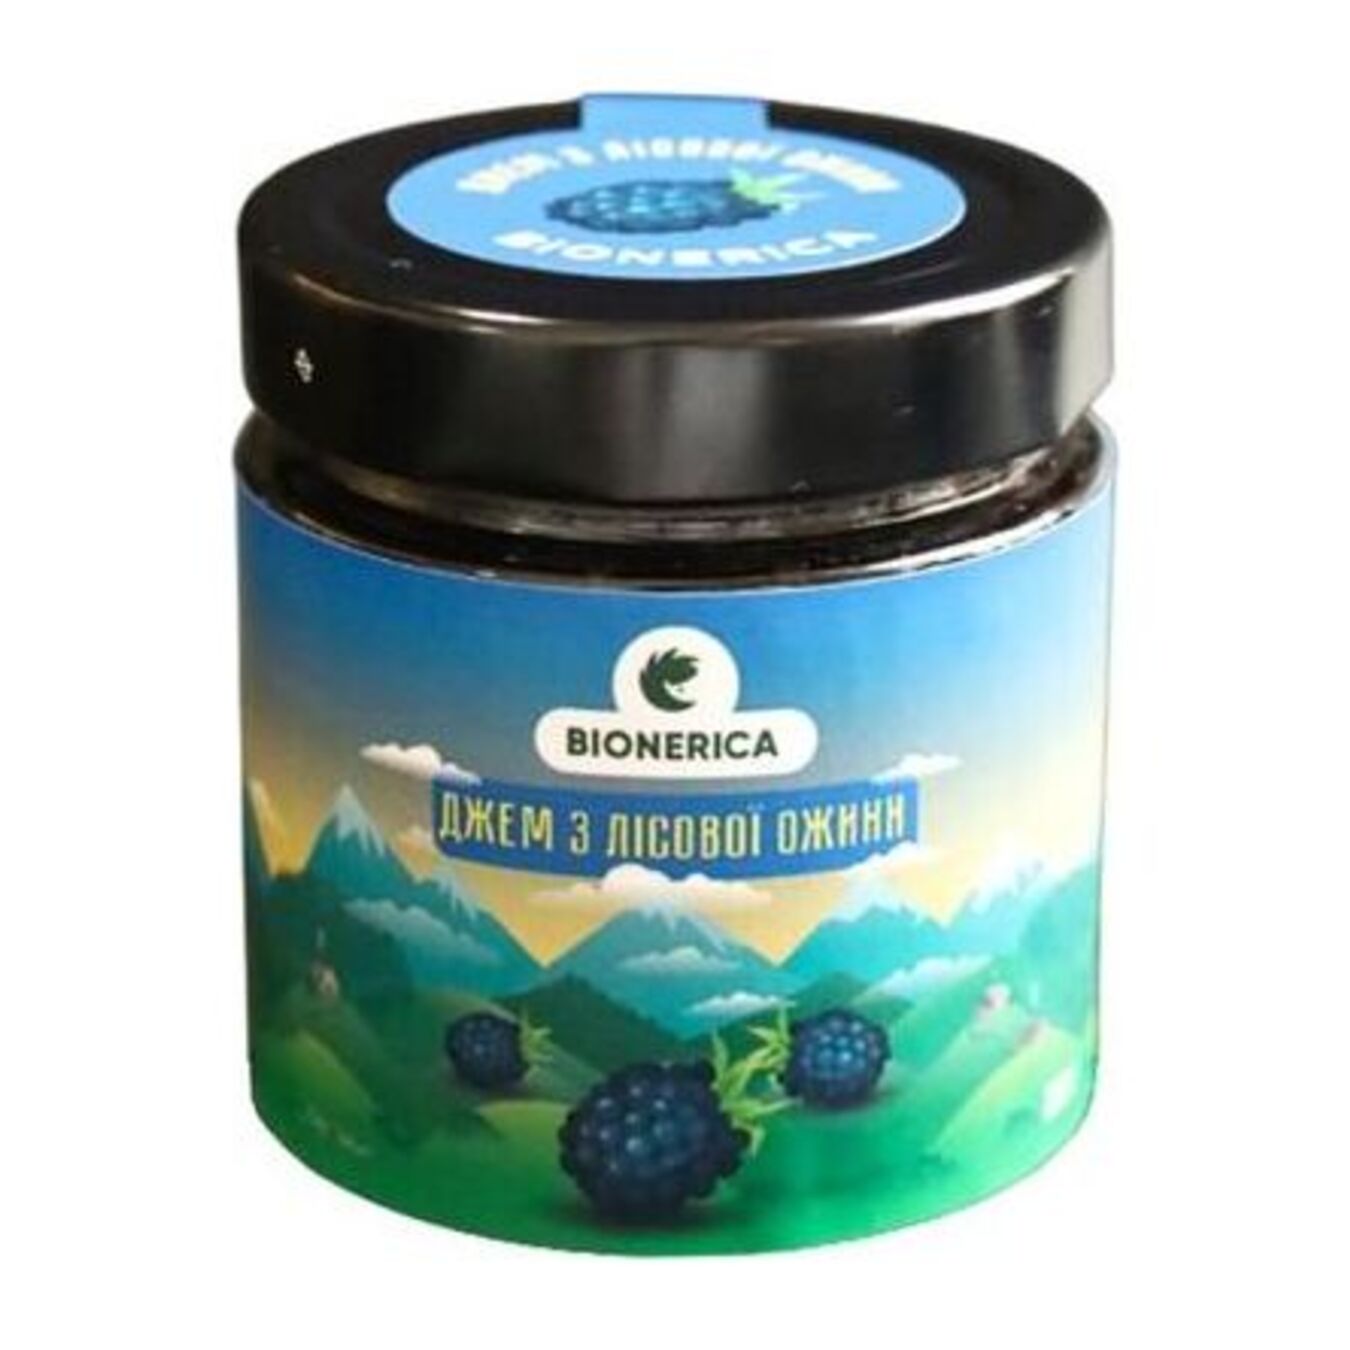 Bionerica jam from wild blackberries 250g